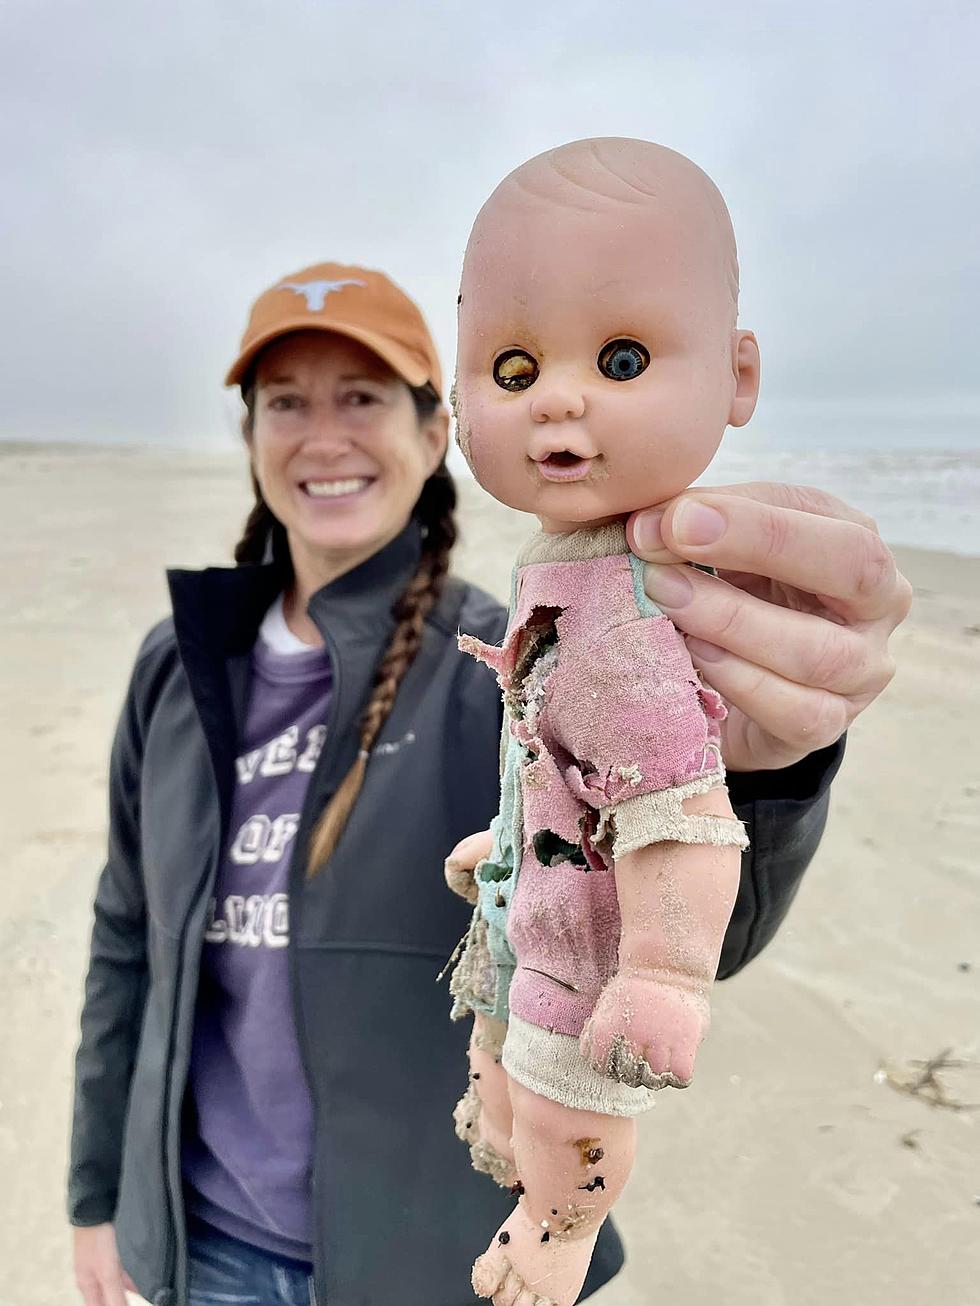 Creepy Dolls Keep Washing Up On Texas Beaches